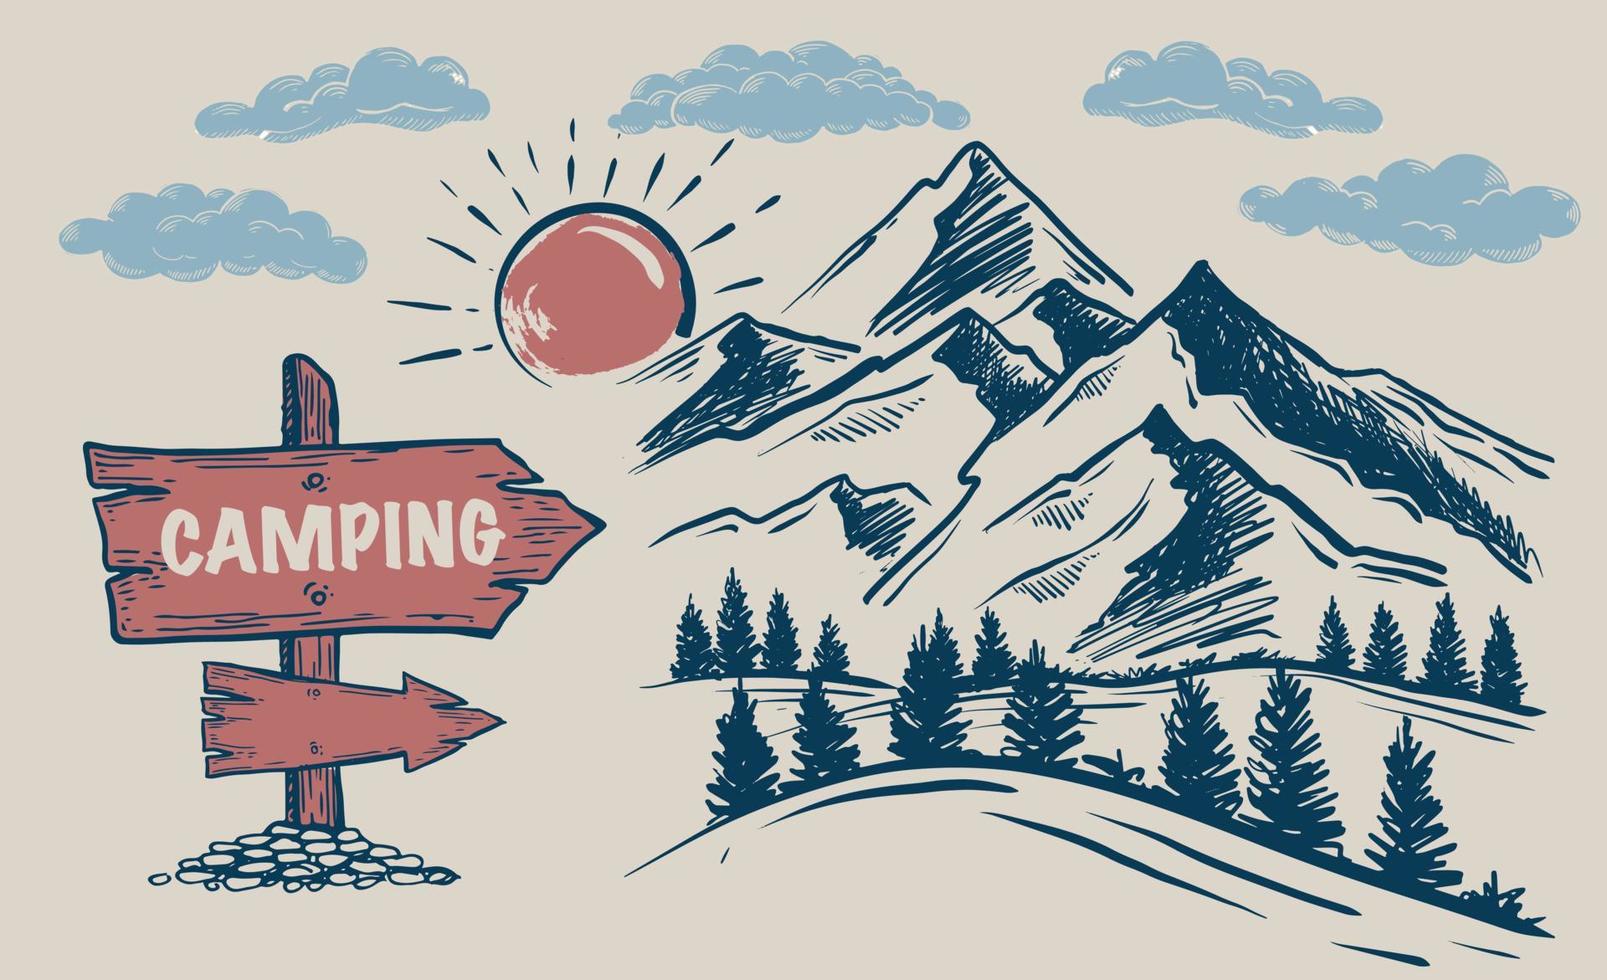 Campingzeit in der Natur, Berglandschaft, Skizzenstil, Vektorgrafiken. vektor